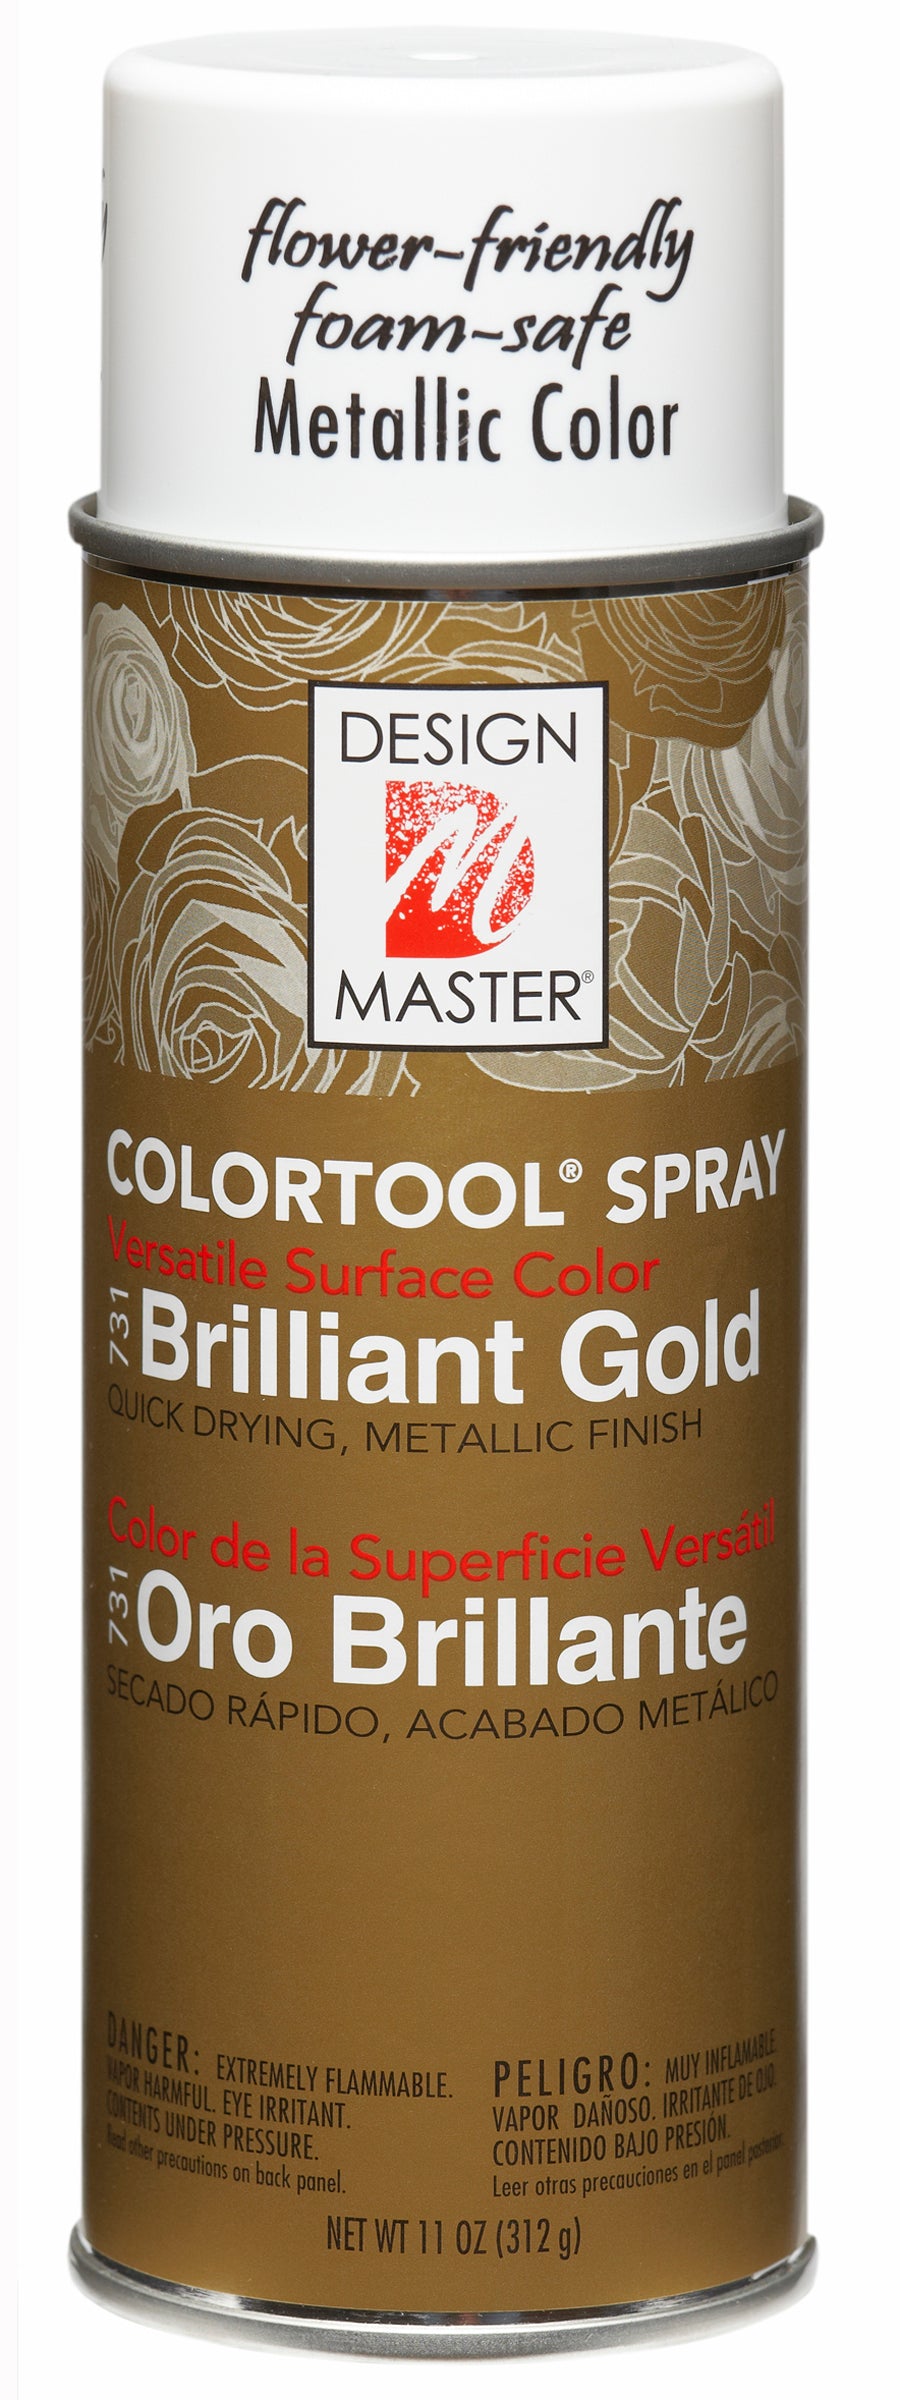 Design Master Colortool Metal Spray -Brilliant Gold